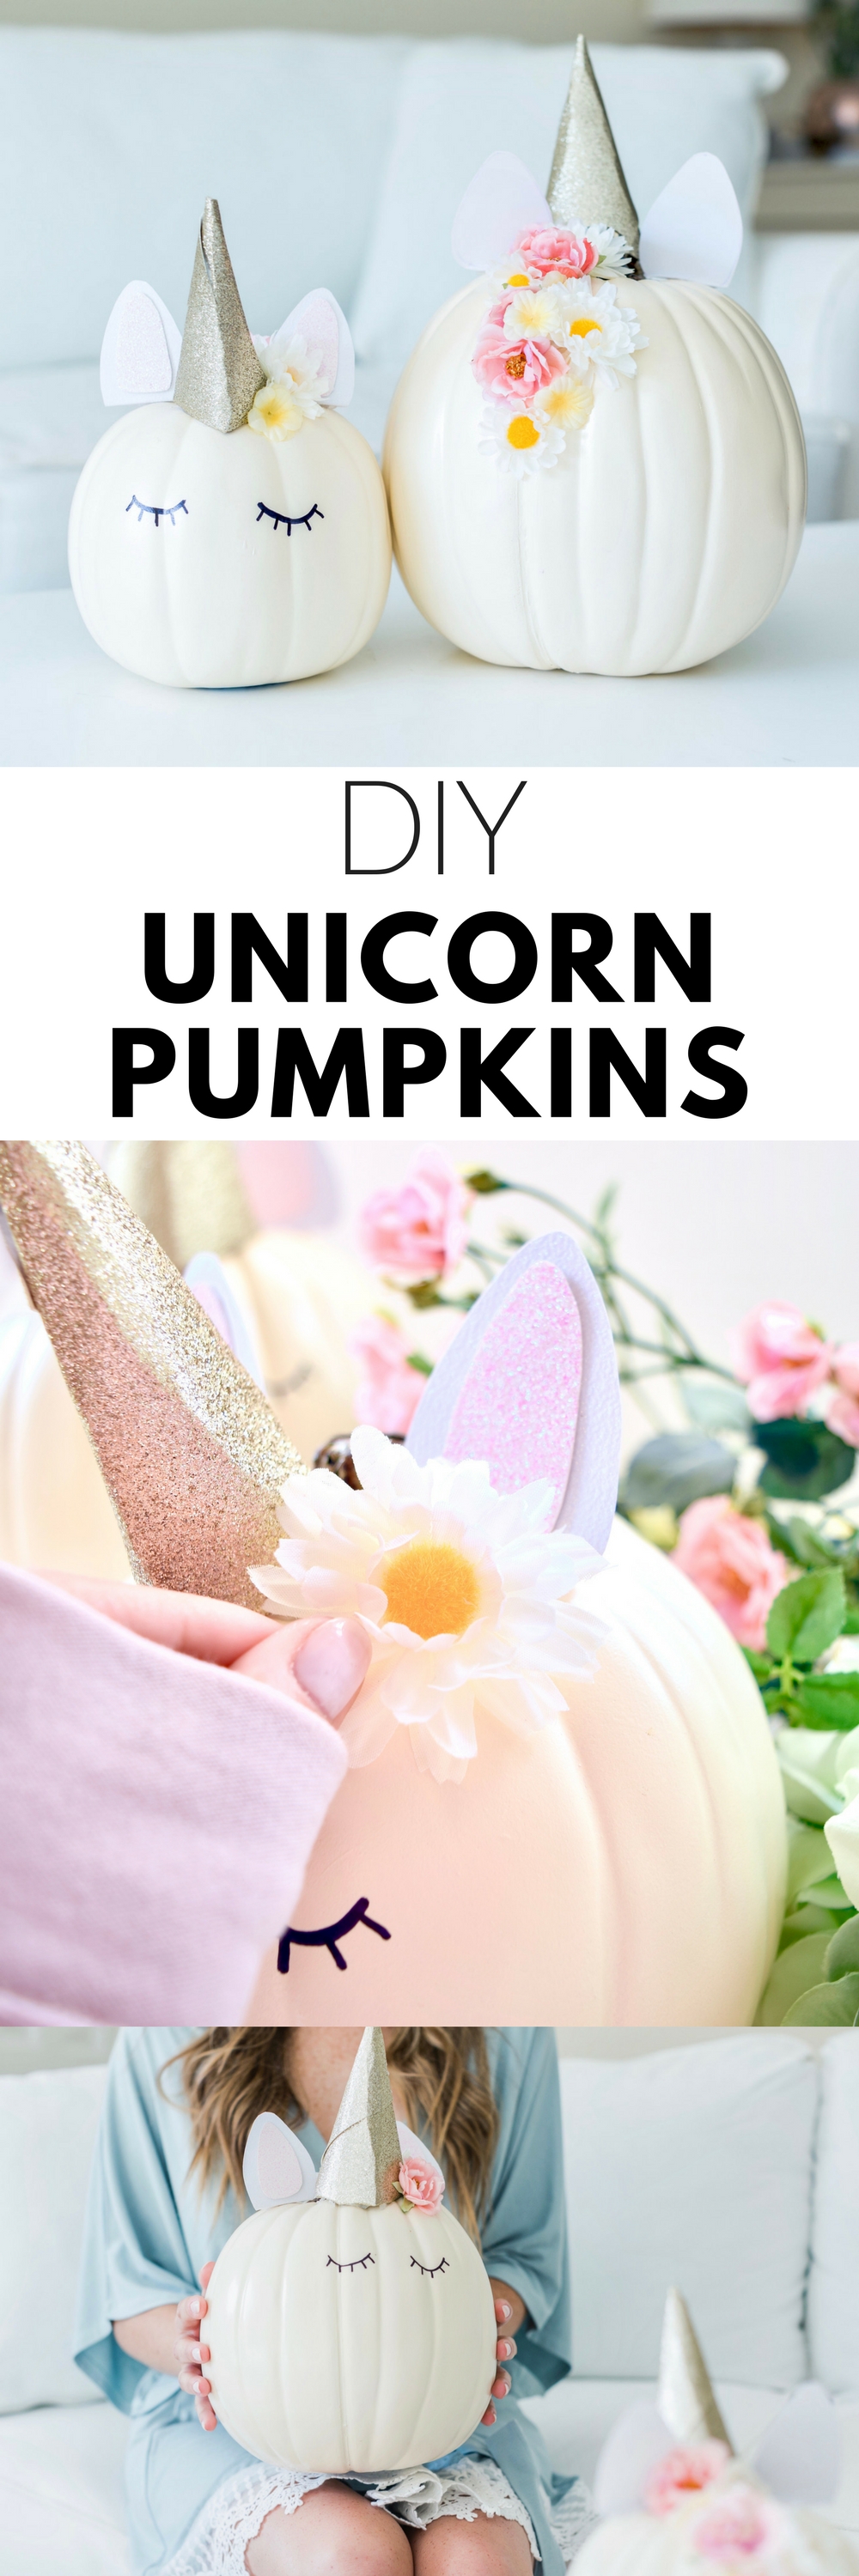 DIY Unicorn Pumpkins Tutorial